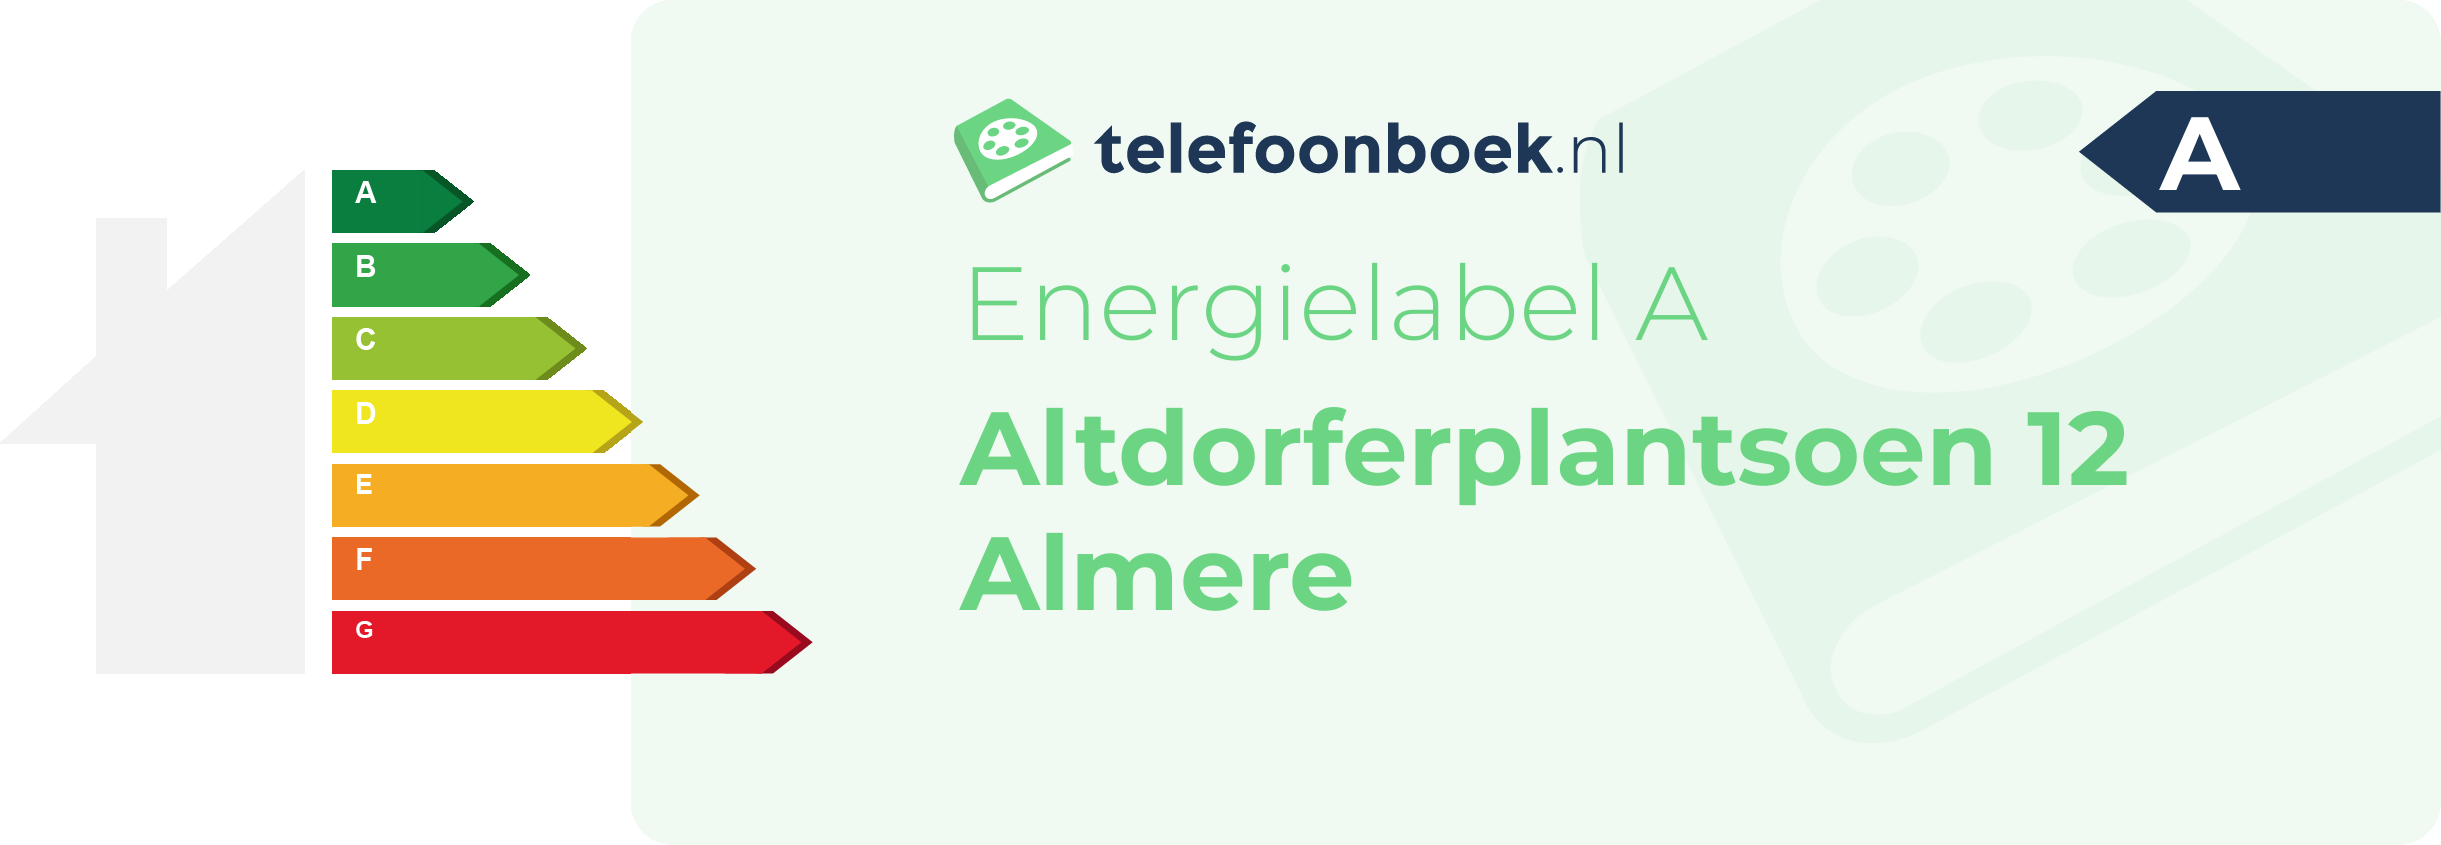 Energielabel Altdorferplantsoen 12 Almere